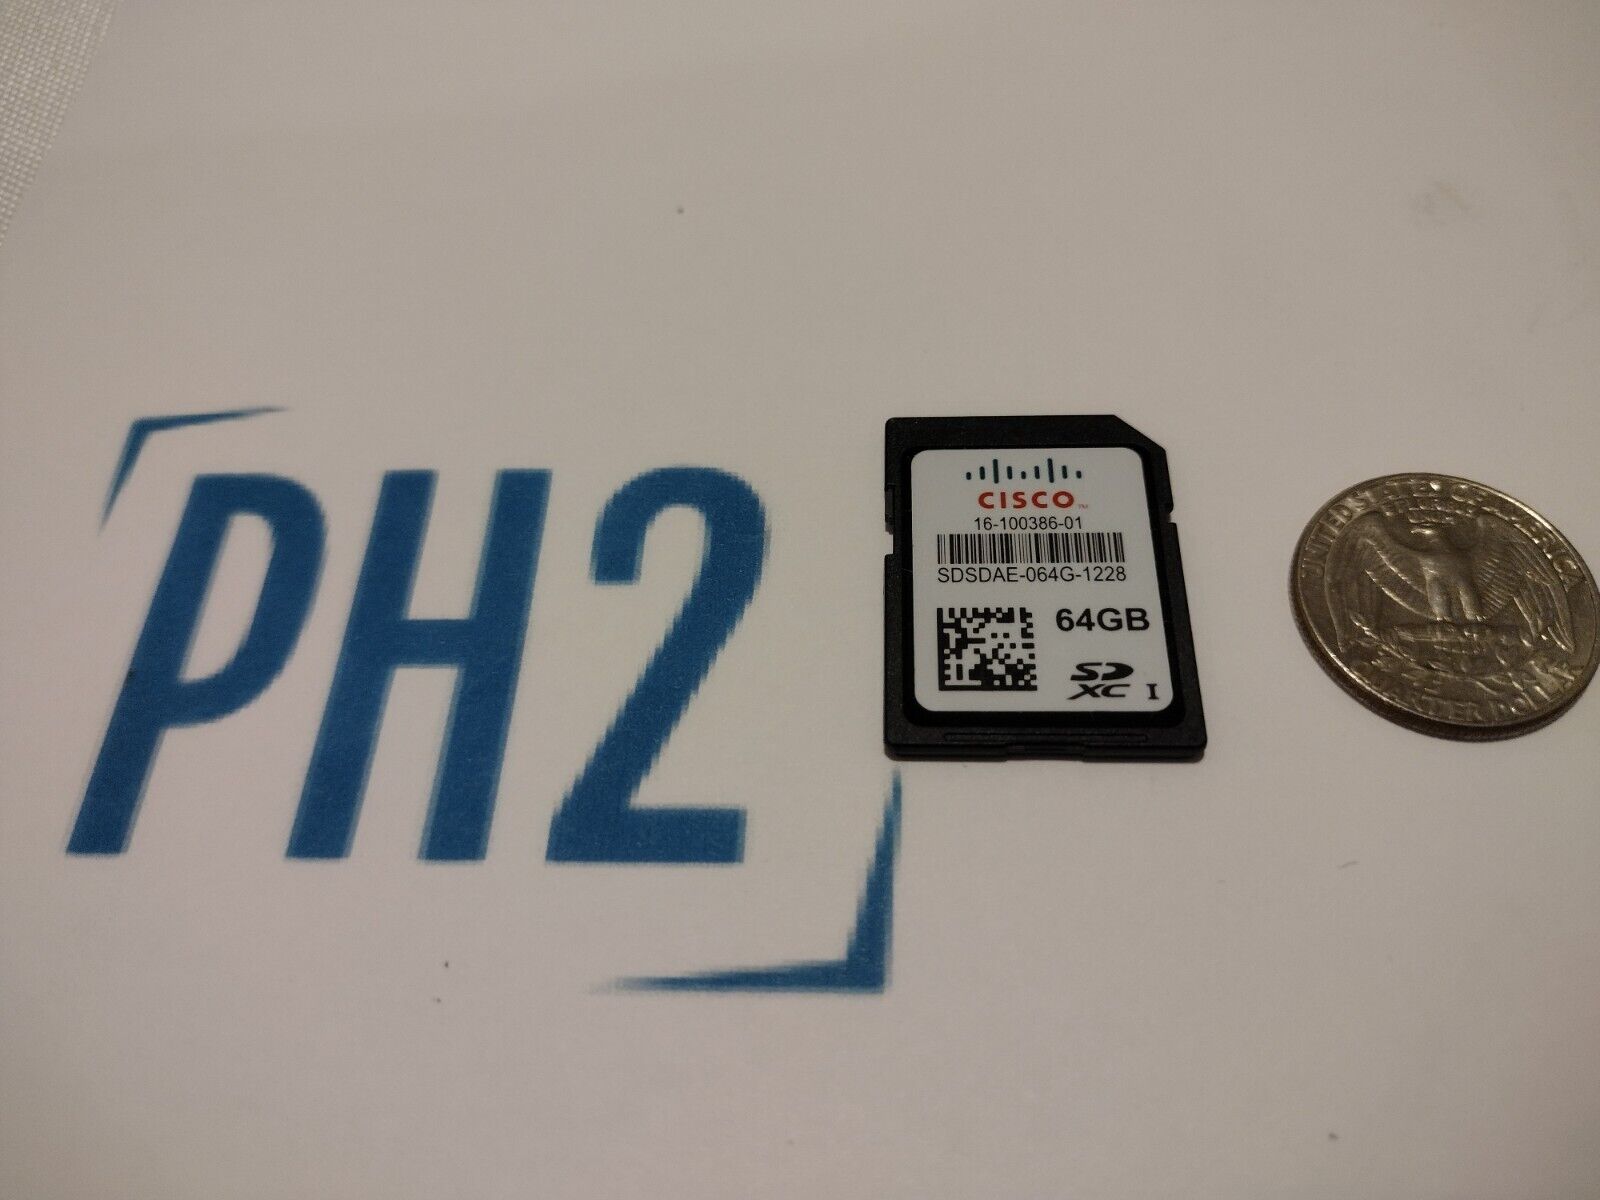 CISCO SDSDAE-064G 16-100386-01 SD XC Flash Memory Card 64GB Secure Digital